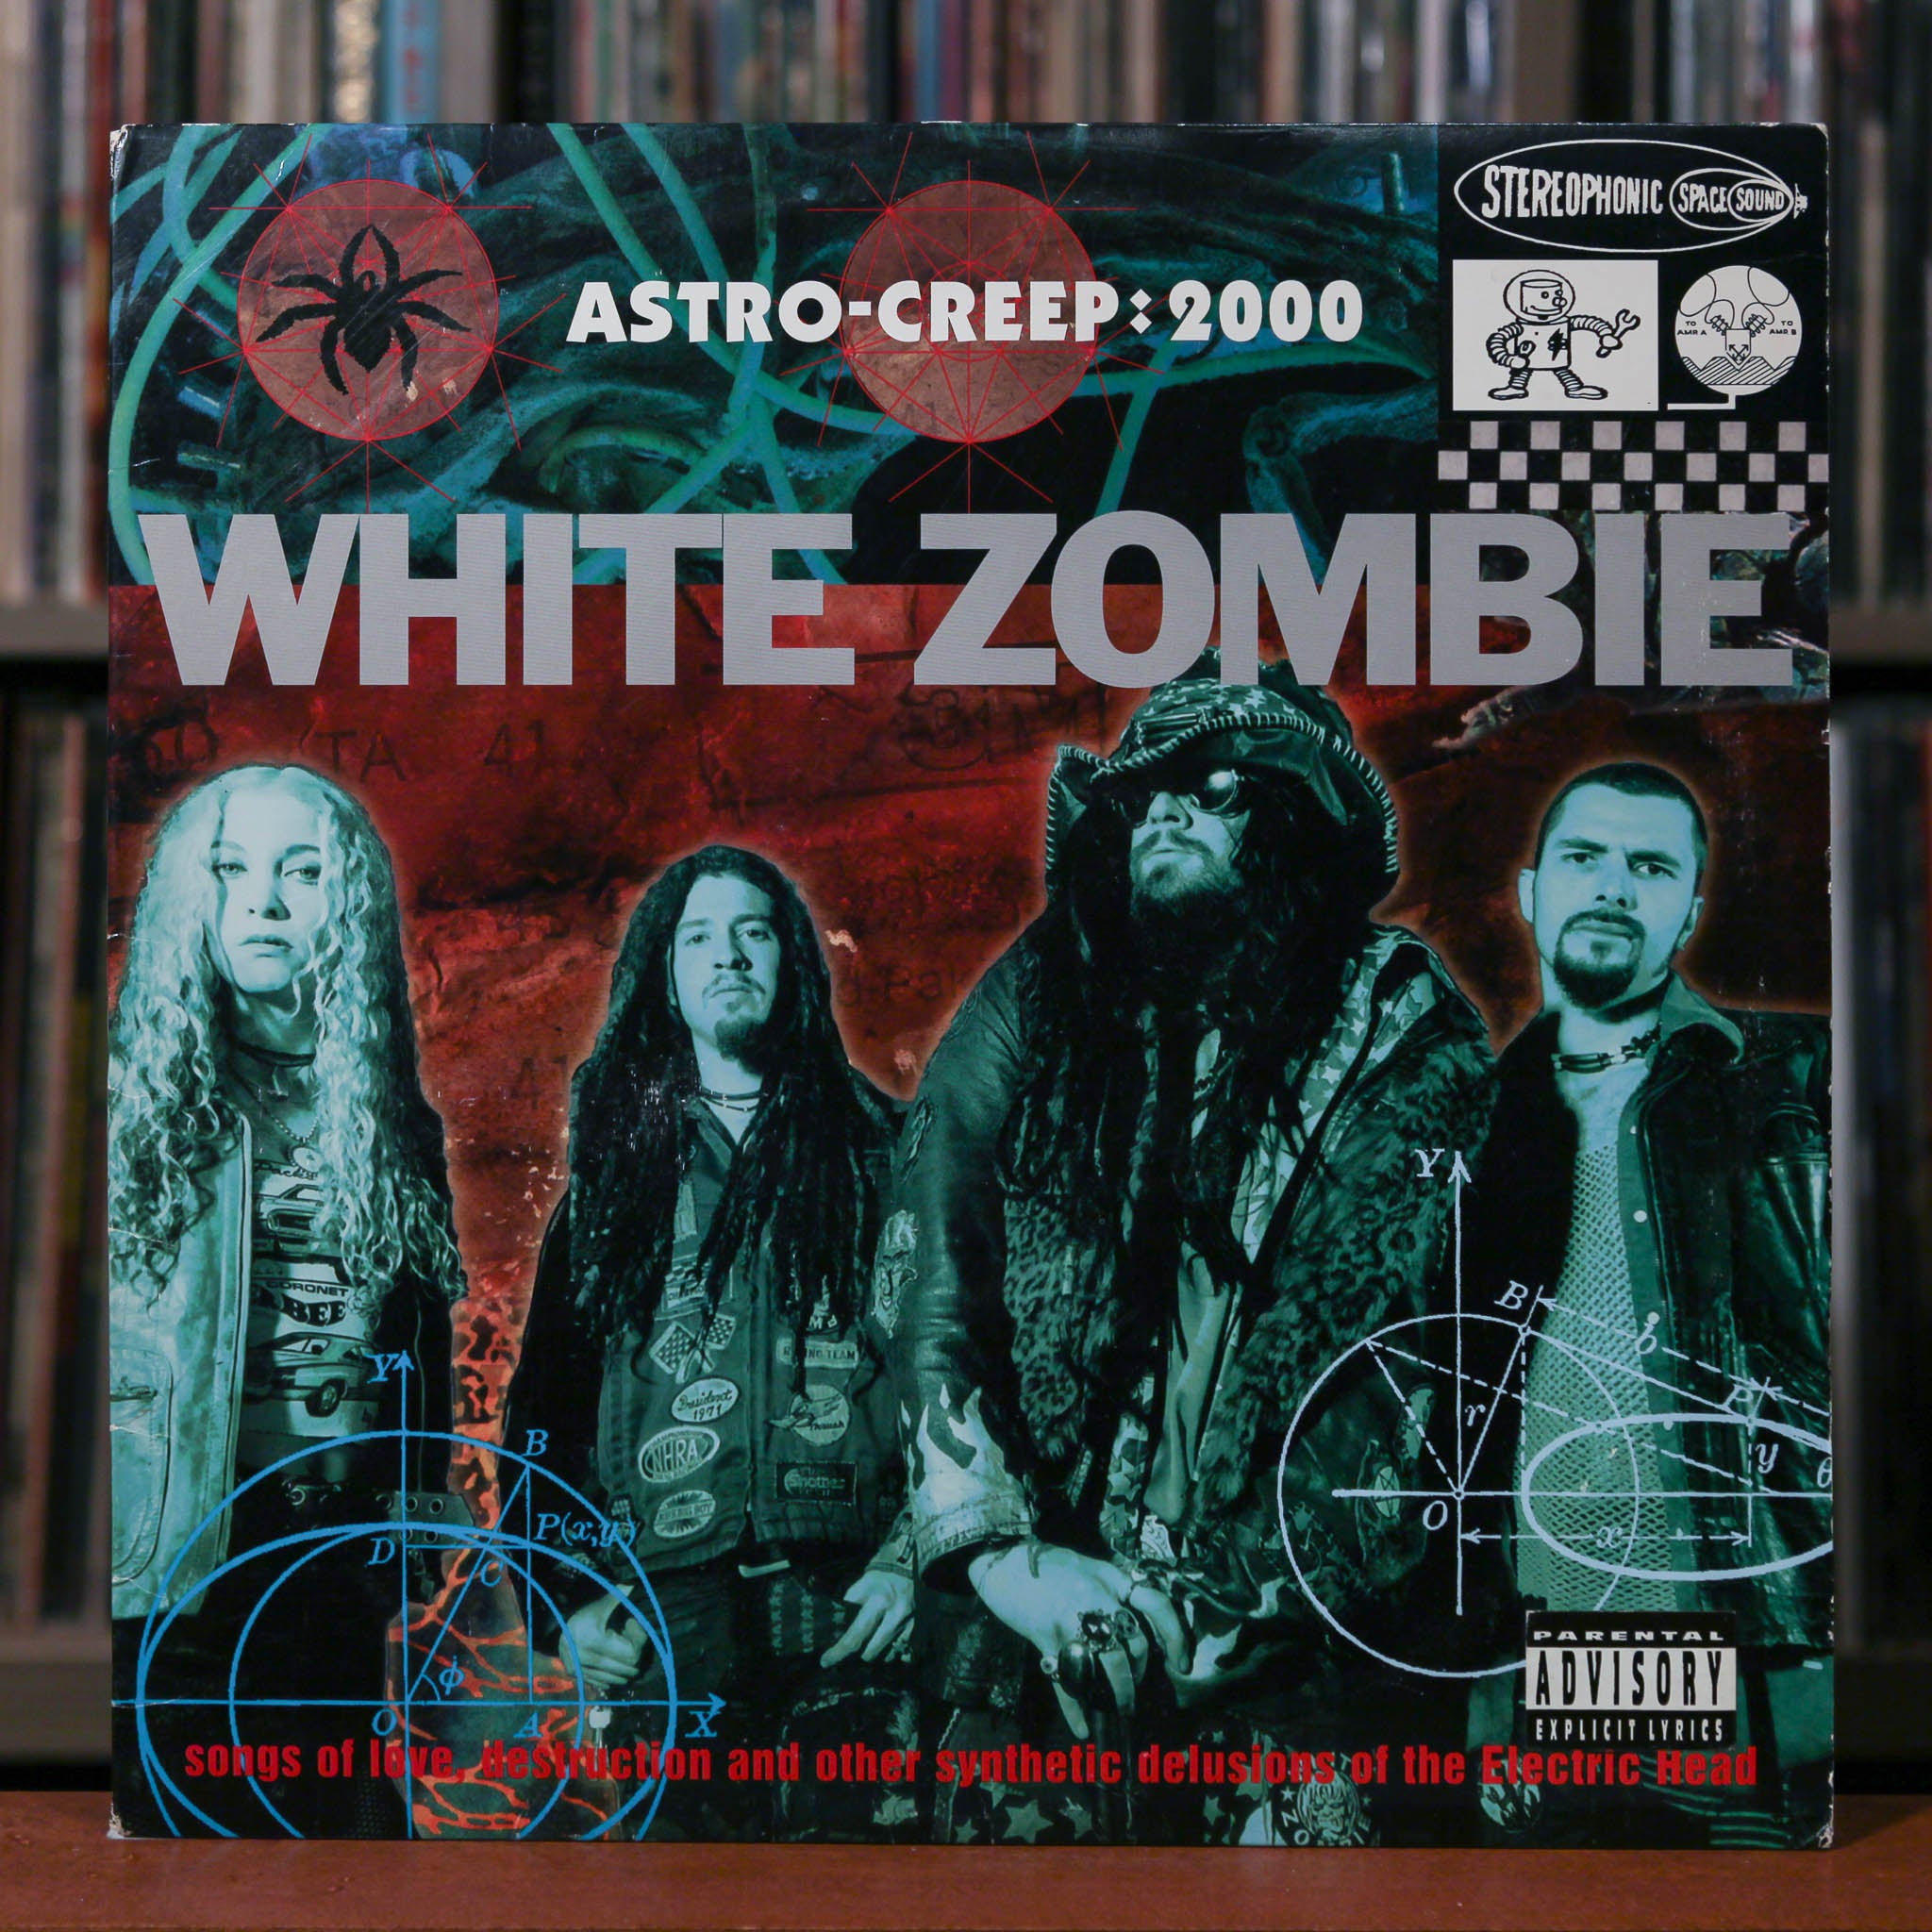 White Zombie - Astro-Creep: 2000 - Limited 1st Press on Blue Vinyl - 1